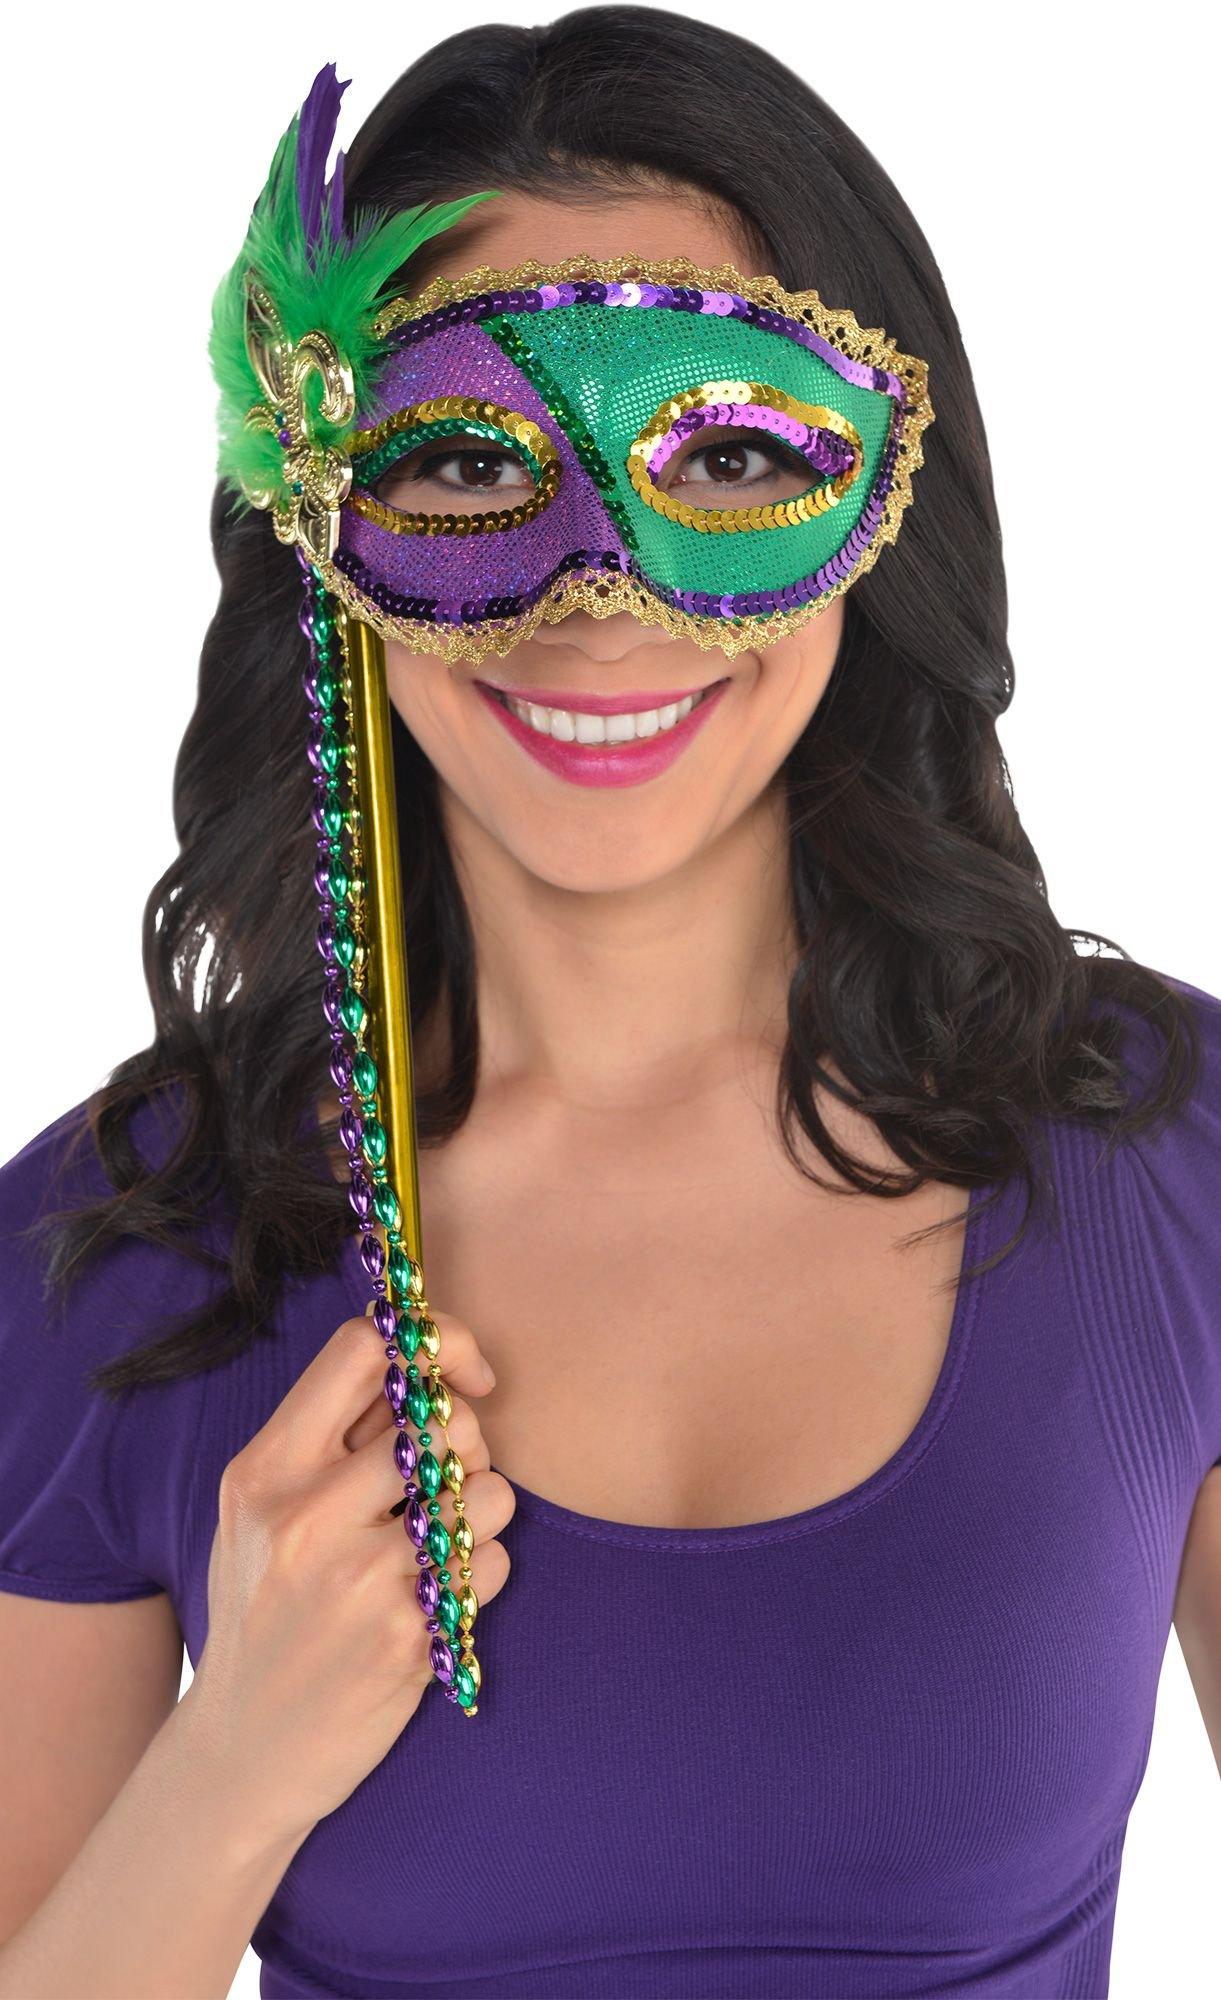 Mardi Gras Mask Sequin Patch